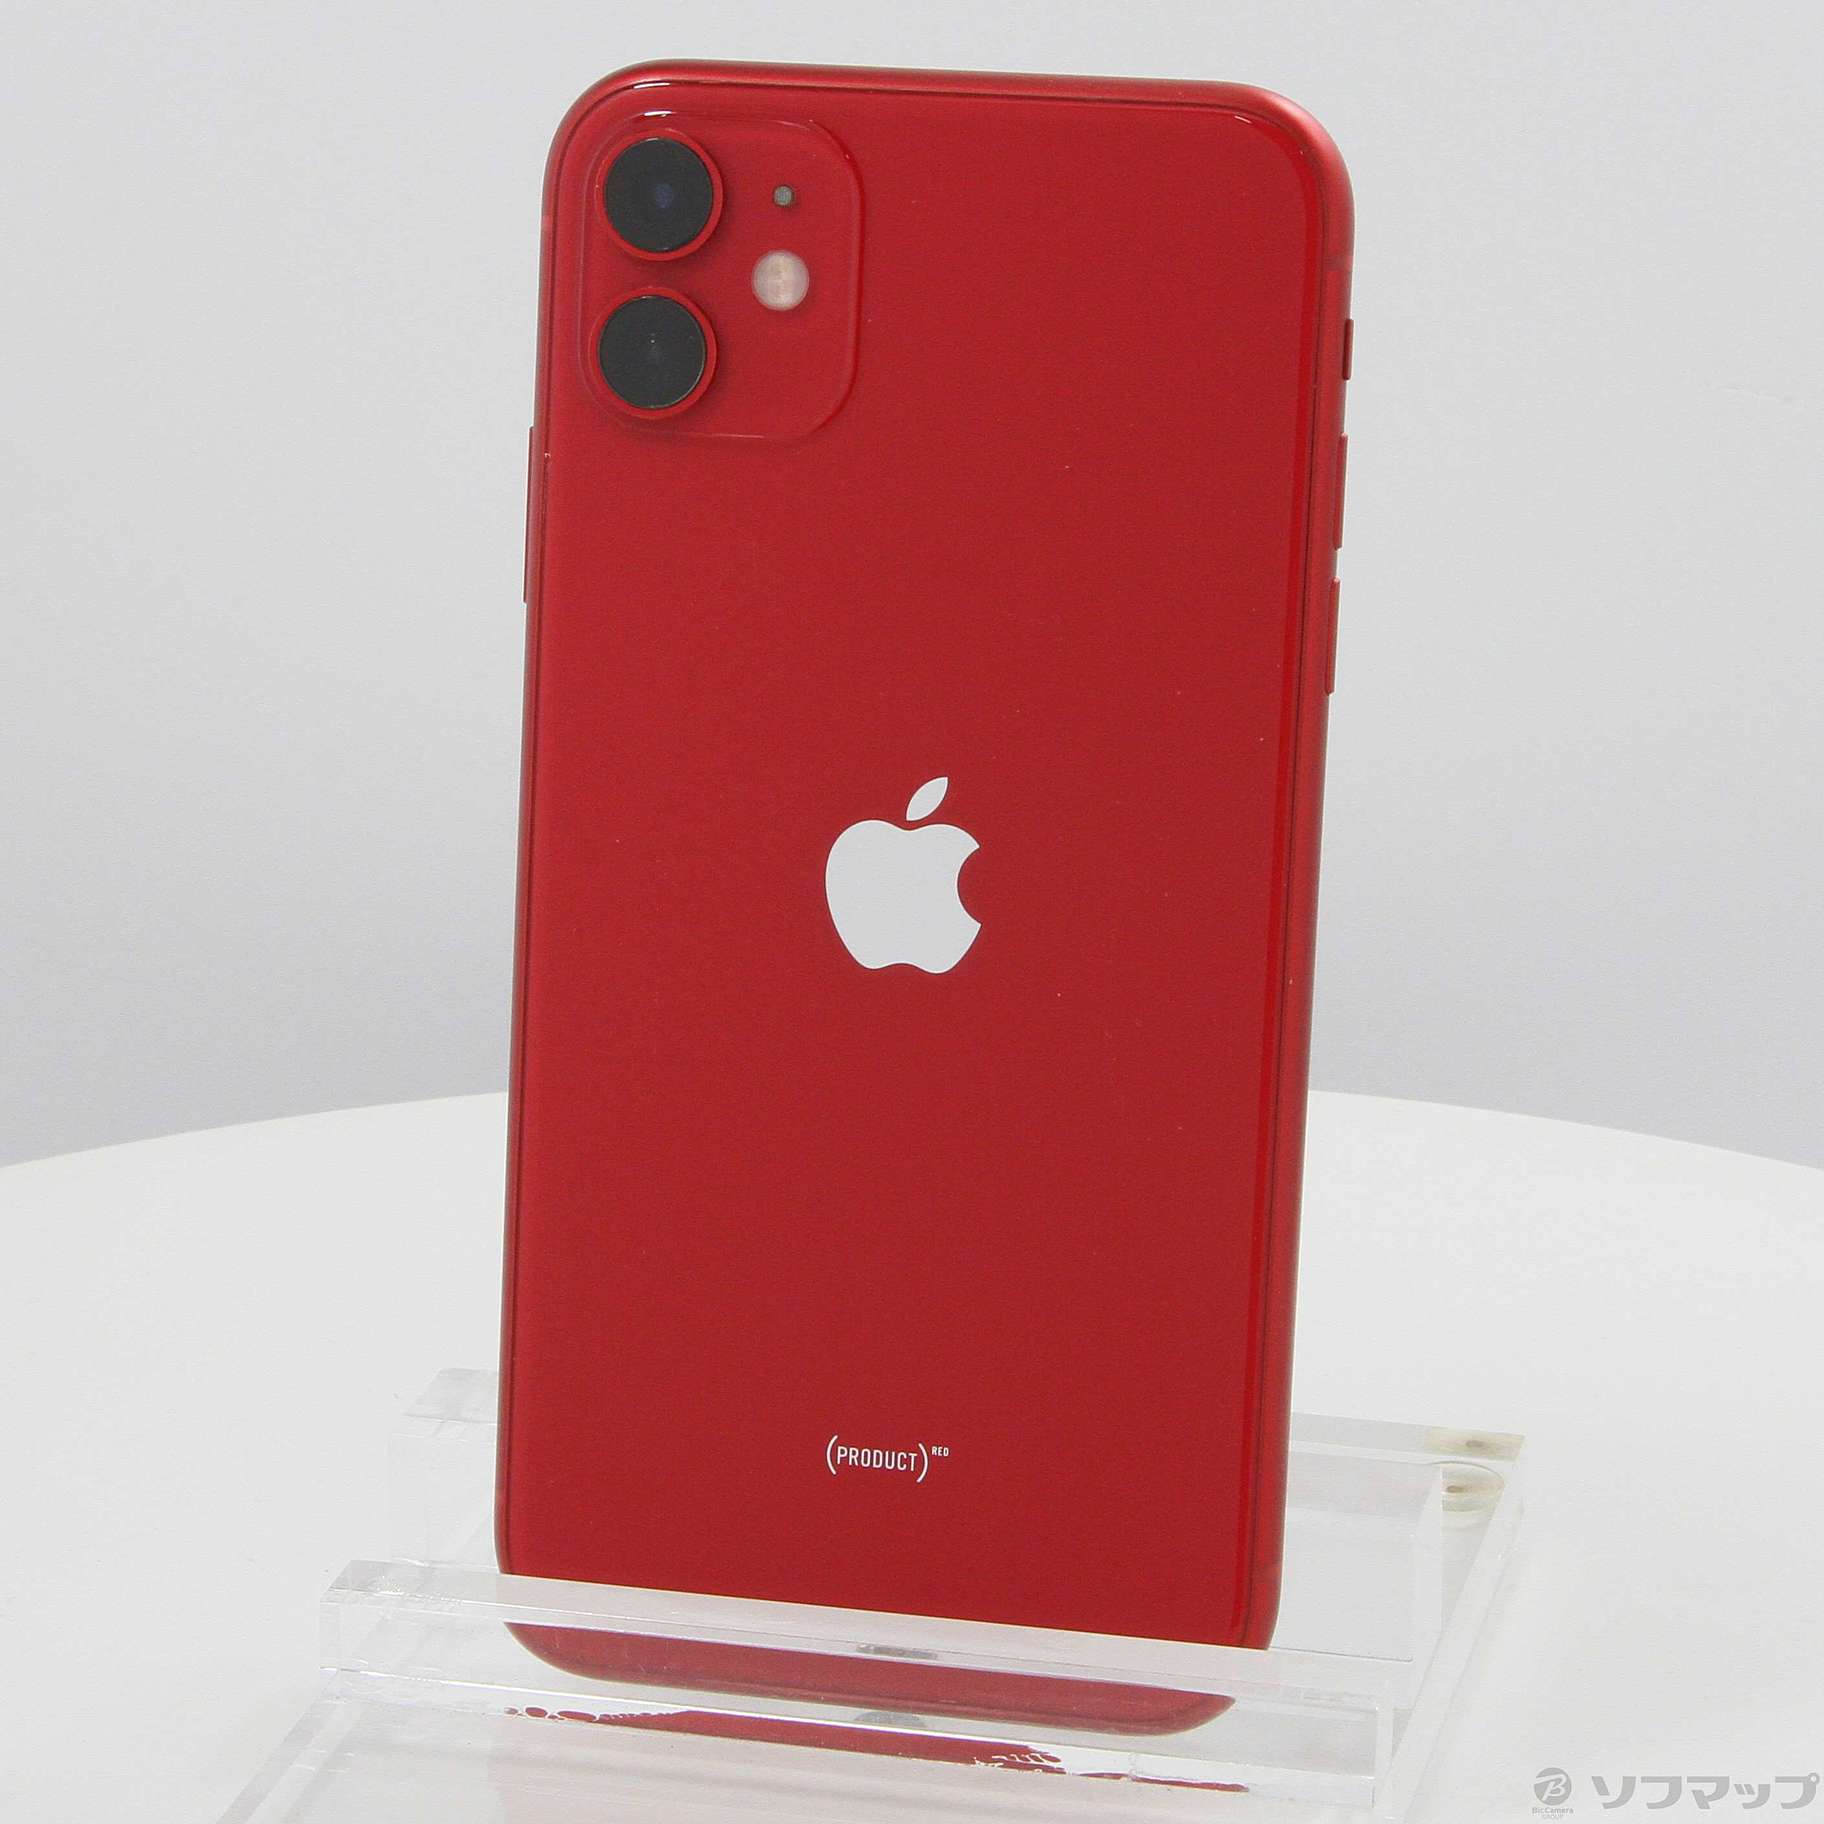 iPhone 11 (PRODUCT)RED 64 GB Softbank | nate-hospital.com